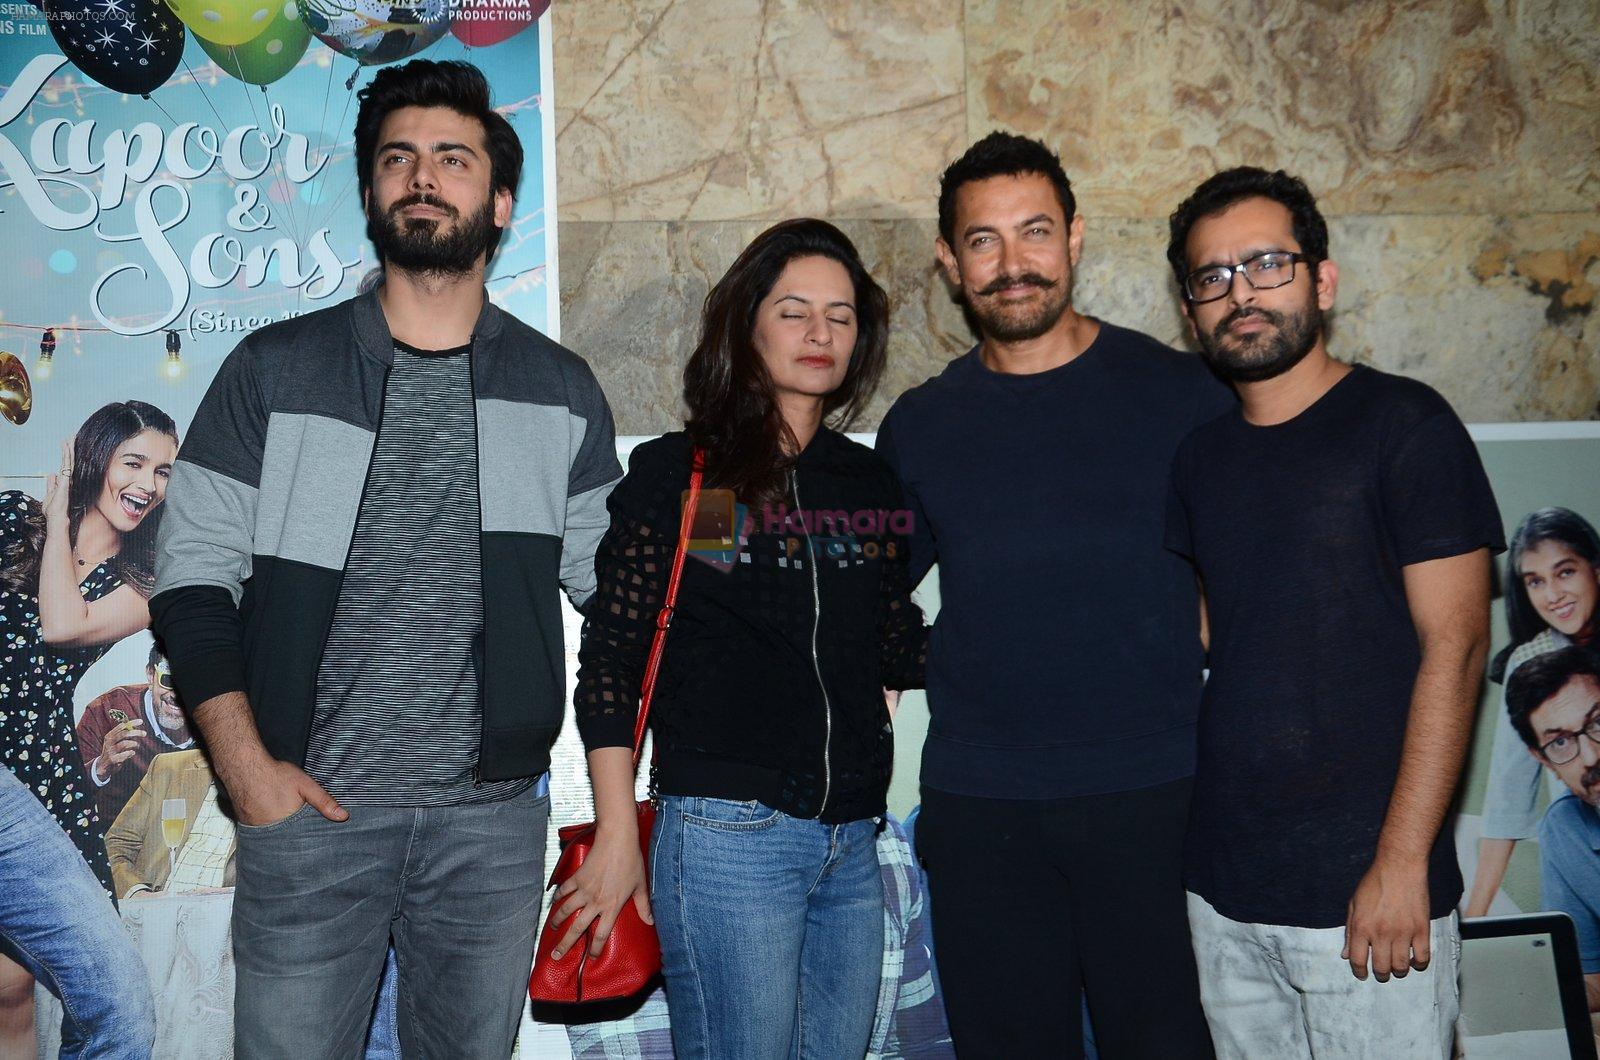 Aamir Khan, Fawad Khan at Kapoor N Sons screening on 15th March 2016